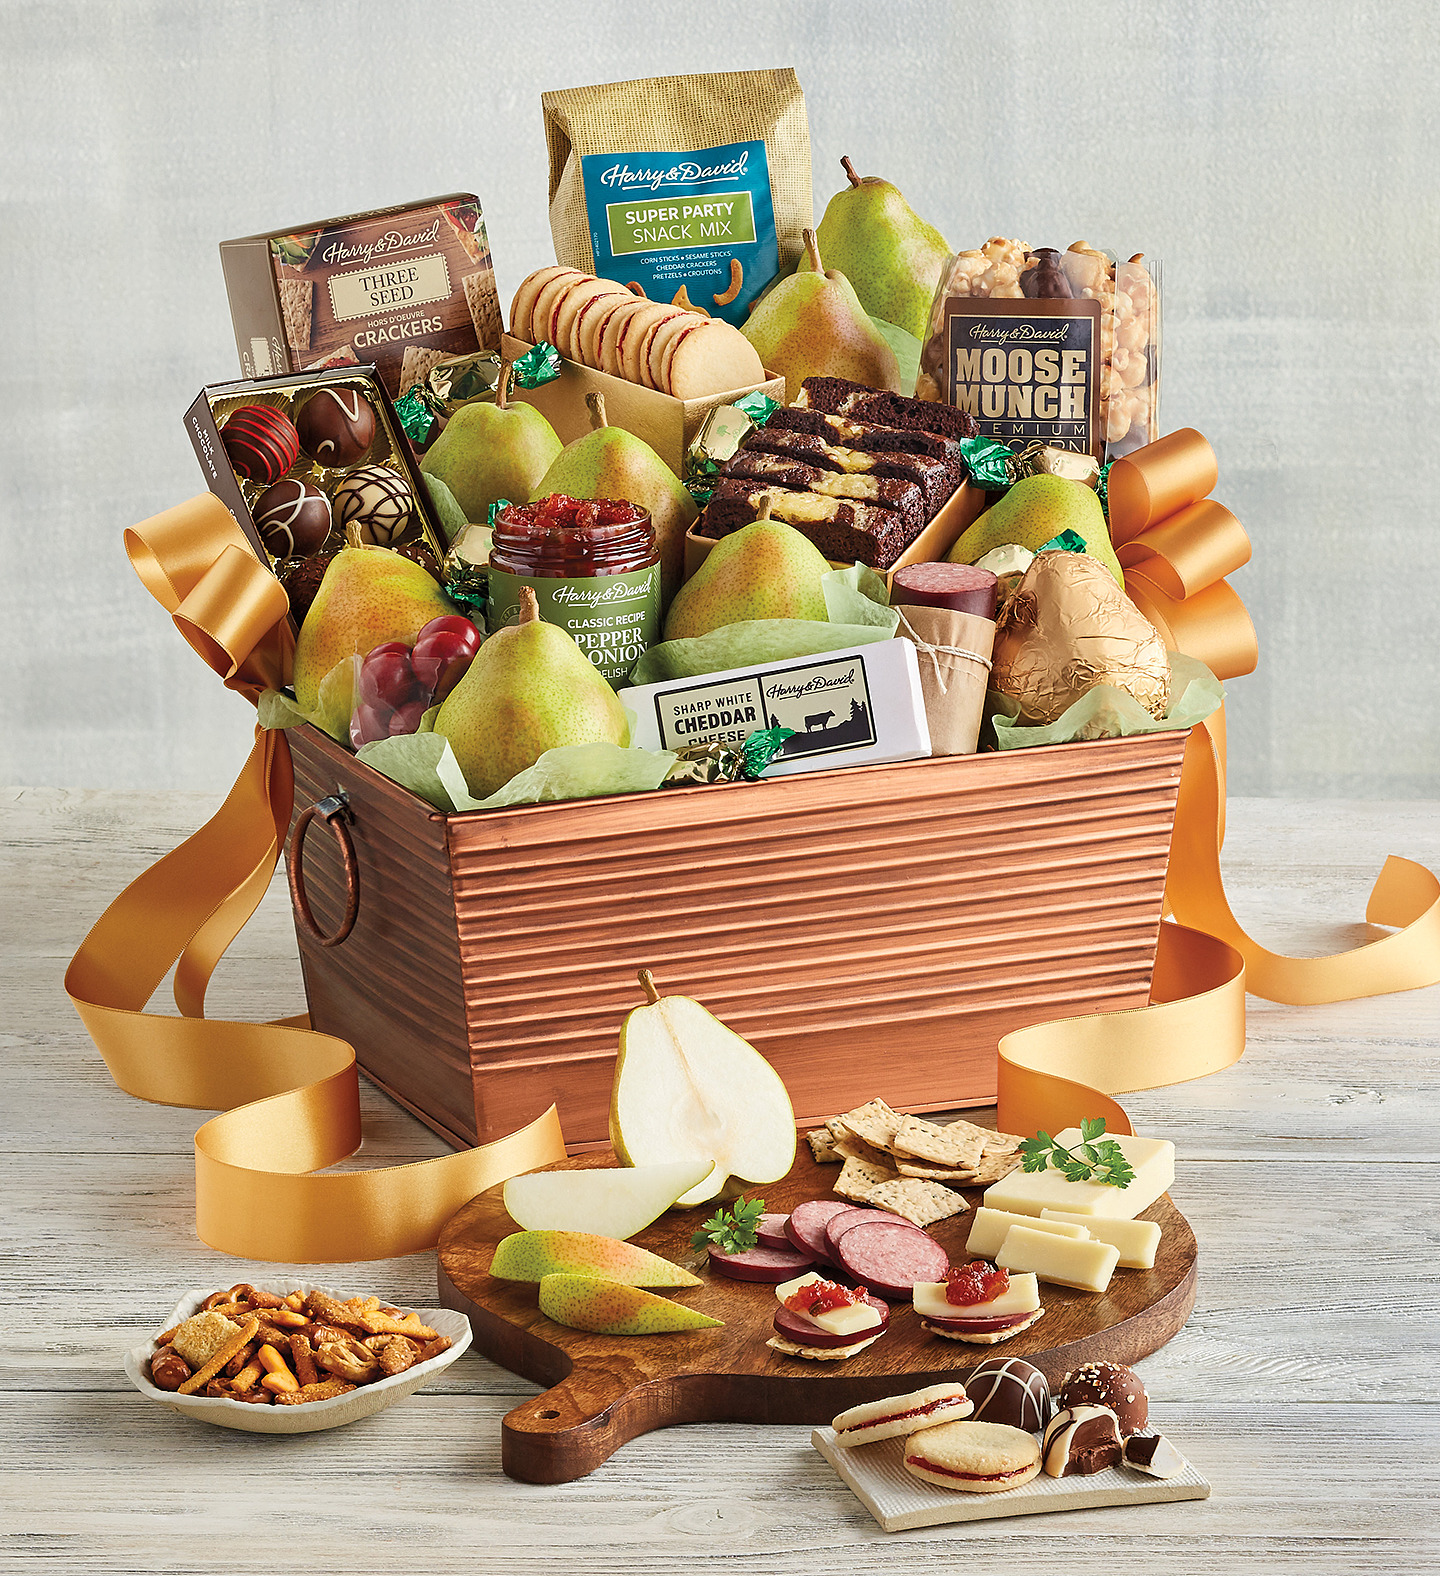 Wholesale Baskets and Gift Basket Supplies | Almacltd.com